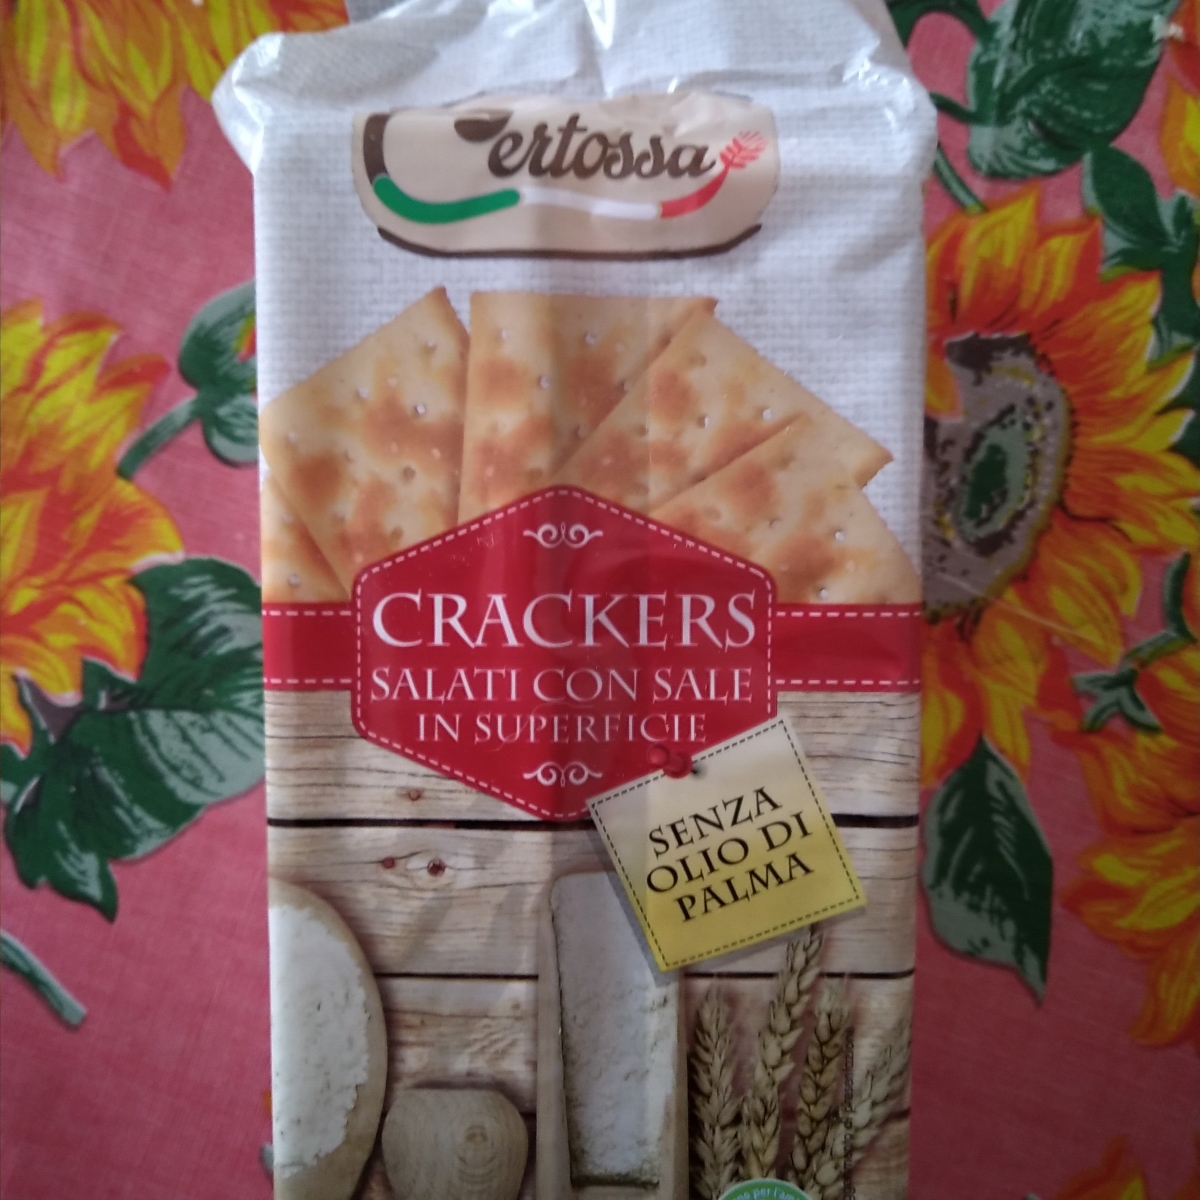 Certossa Crackers Salati con Sale In Superficie Review